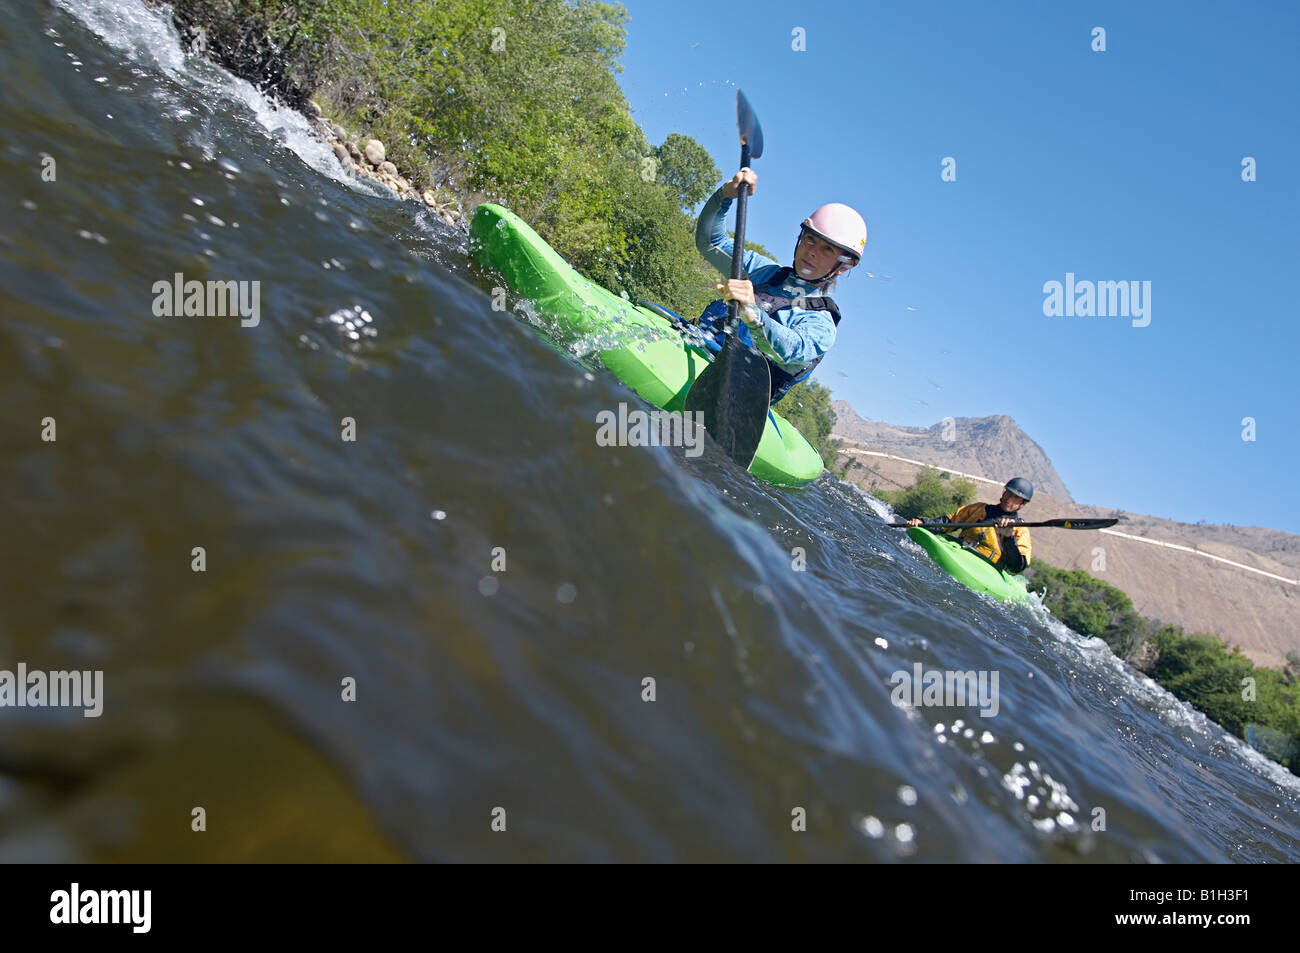 Two people kayaking in mountain river Stock Photo